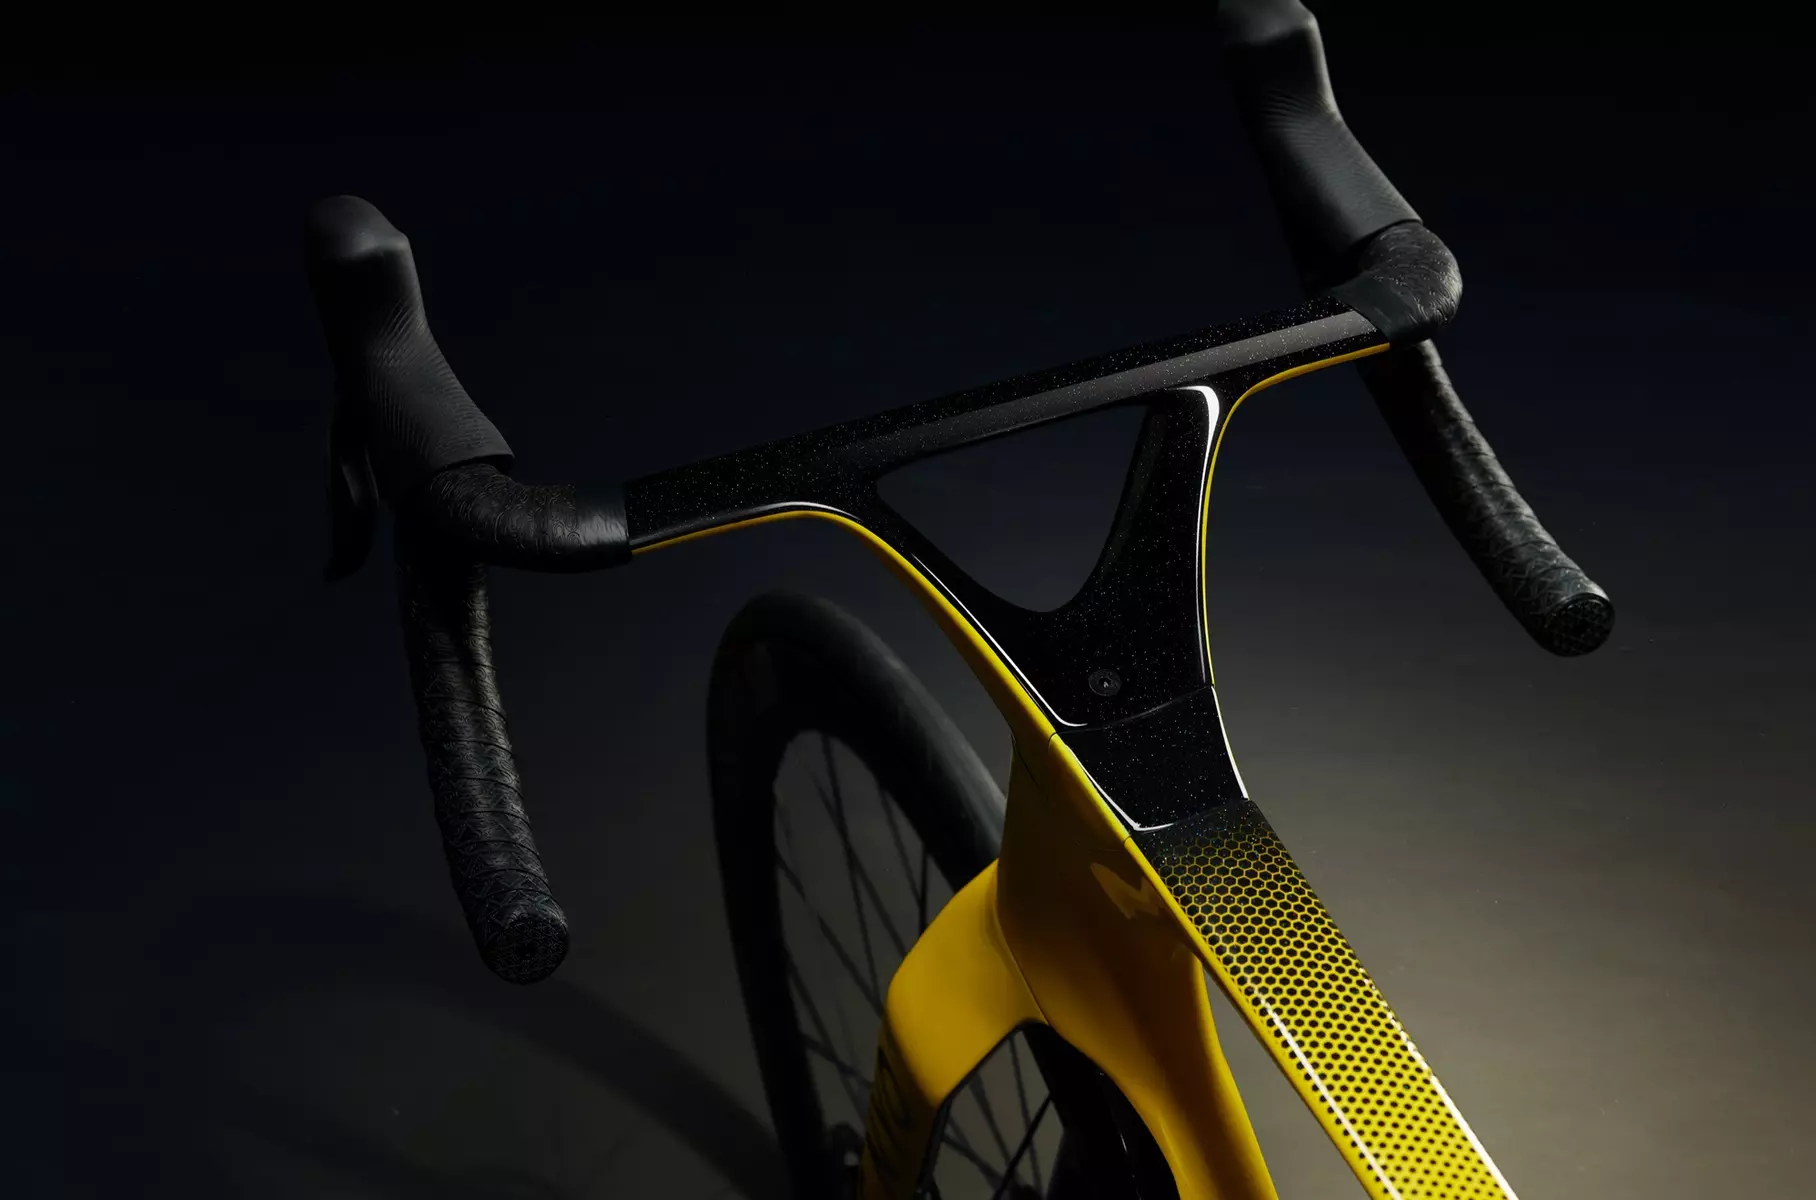 Lotus выпустила велосипед за 25 тысяч евро (a1621866eeb327f05cdeebf416cd6b48ebd8452d)